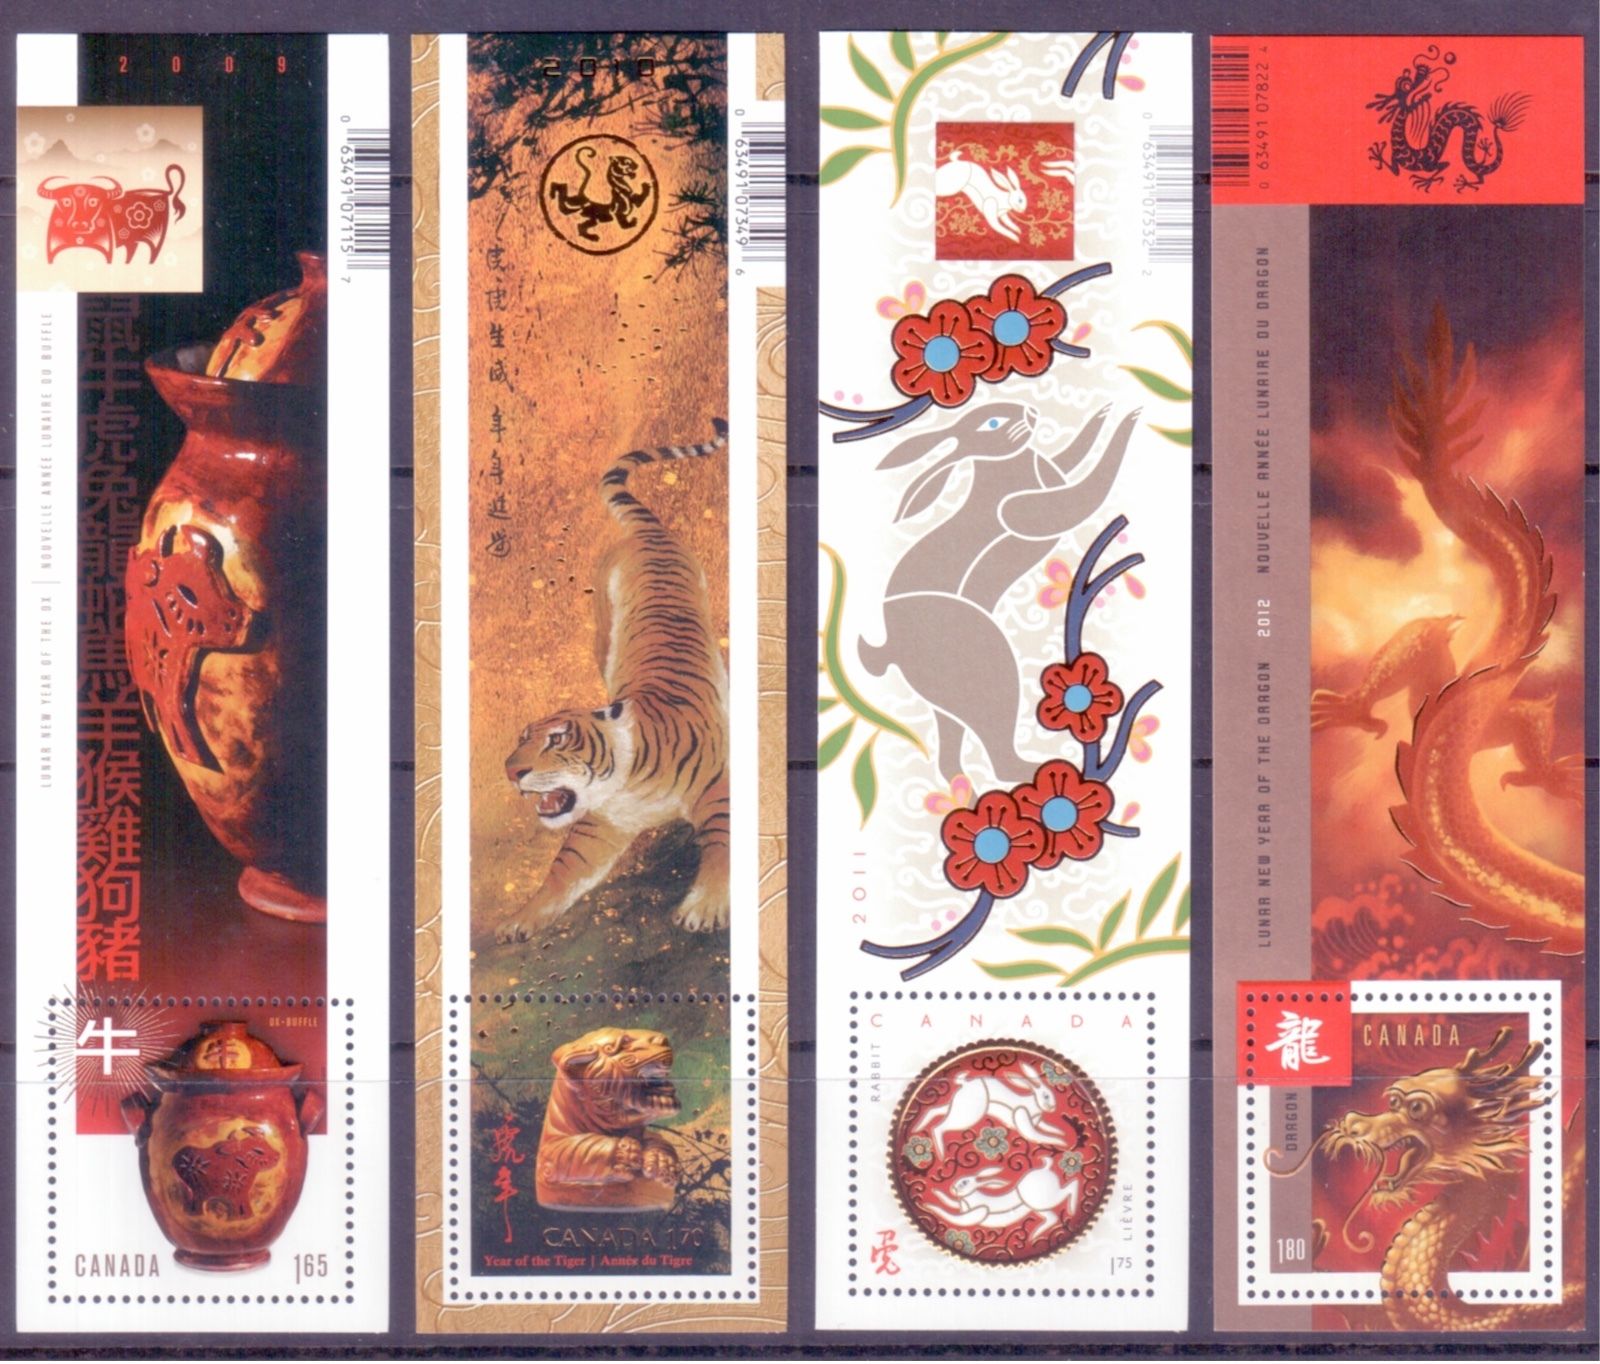 Canada Lunar Year Souvenir Stamp Sheet Set of 6 MNH